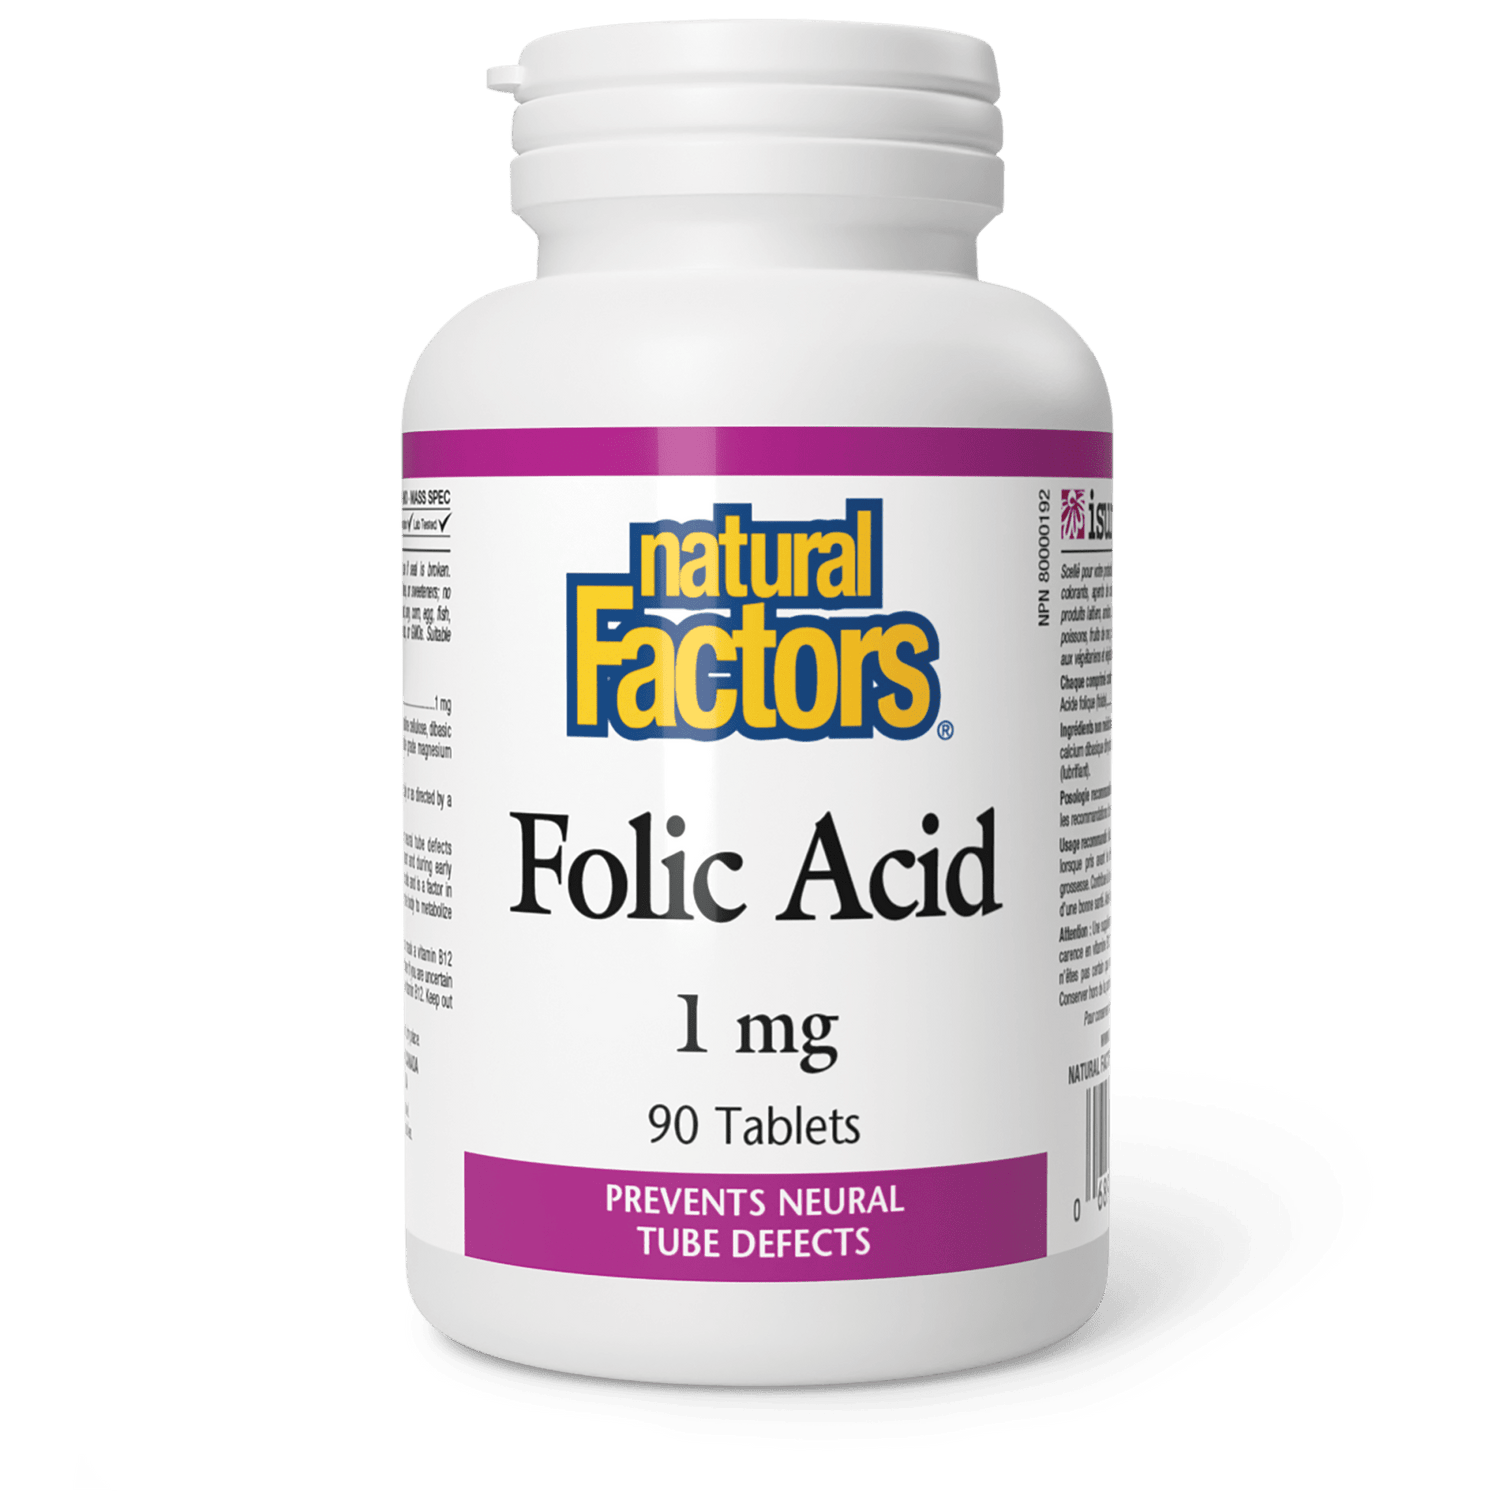 Folic Acid 1 mg, Natural Factors|v|image|1270